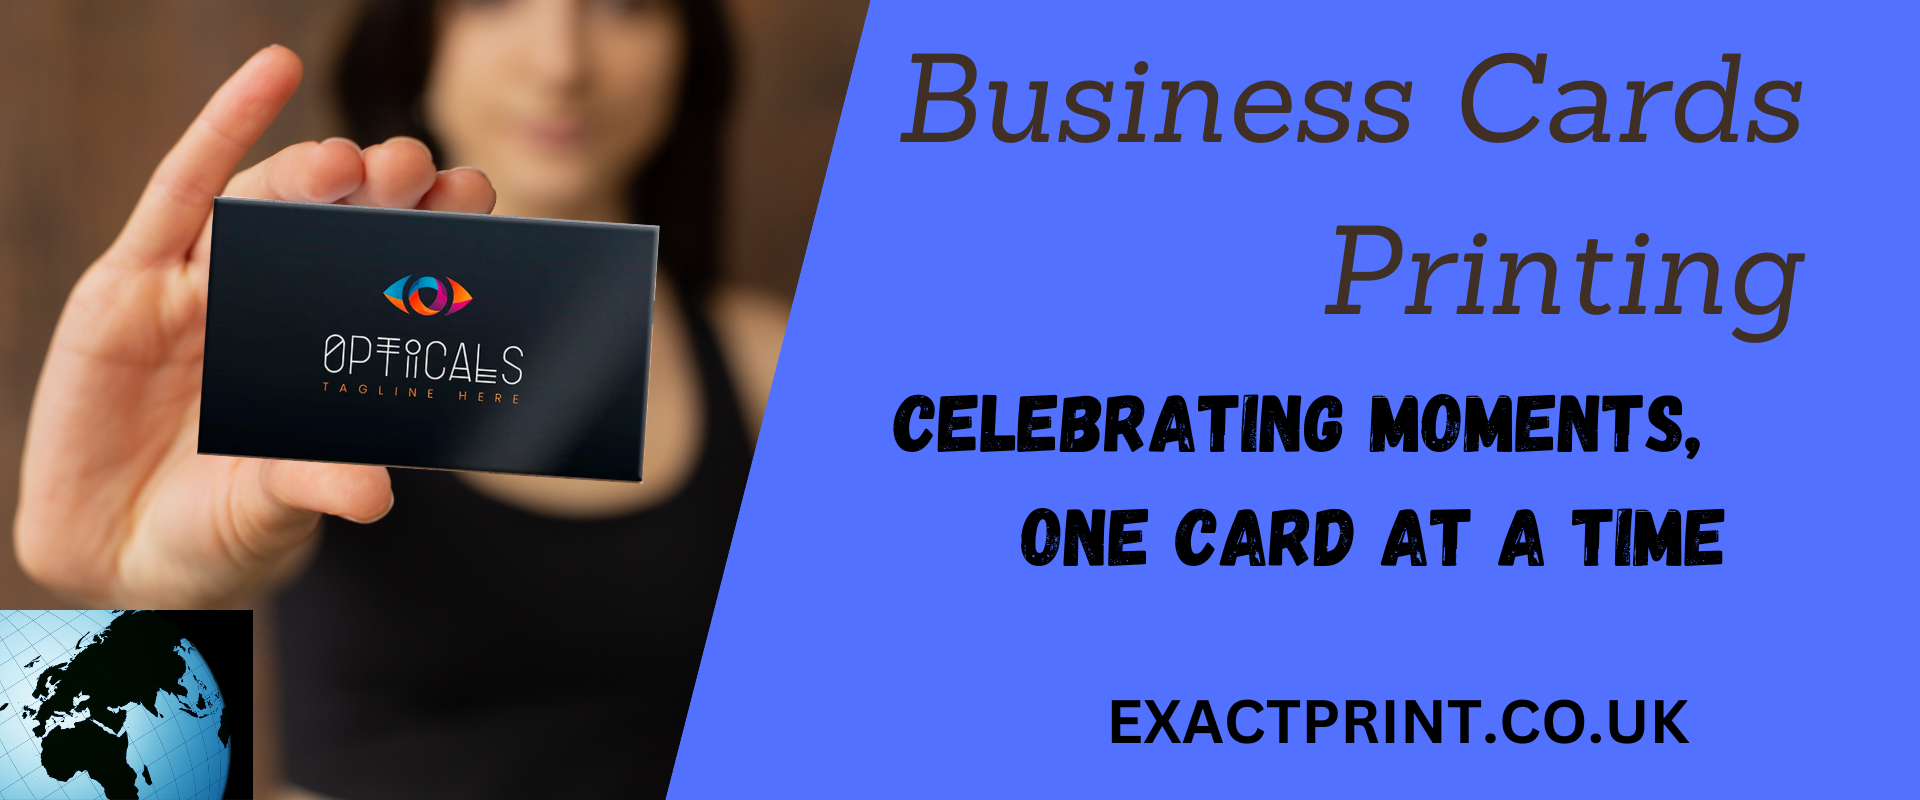 Business Cards Printing - Exact print